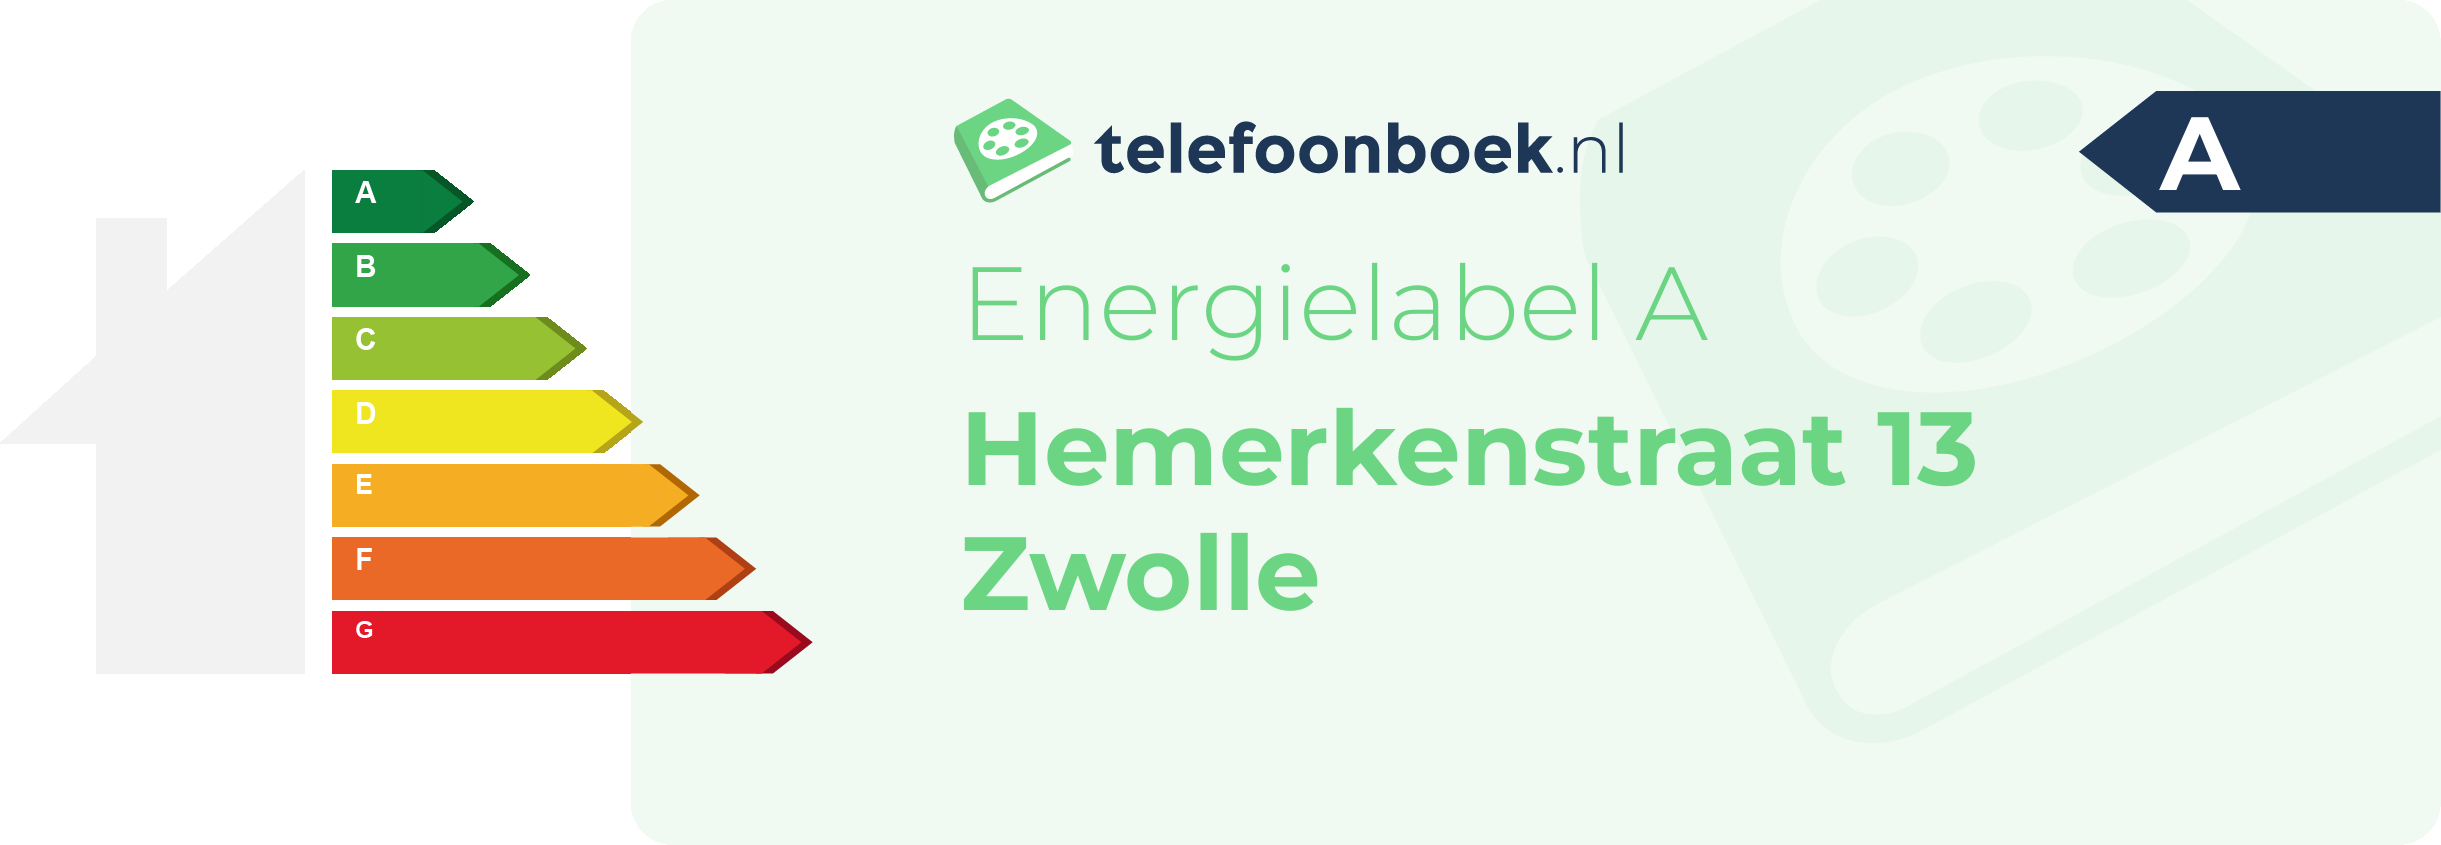 Energielabel Hemerkenstraat 13 Zwolle